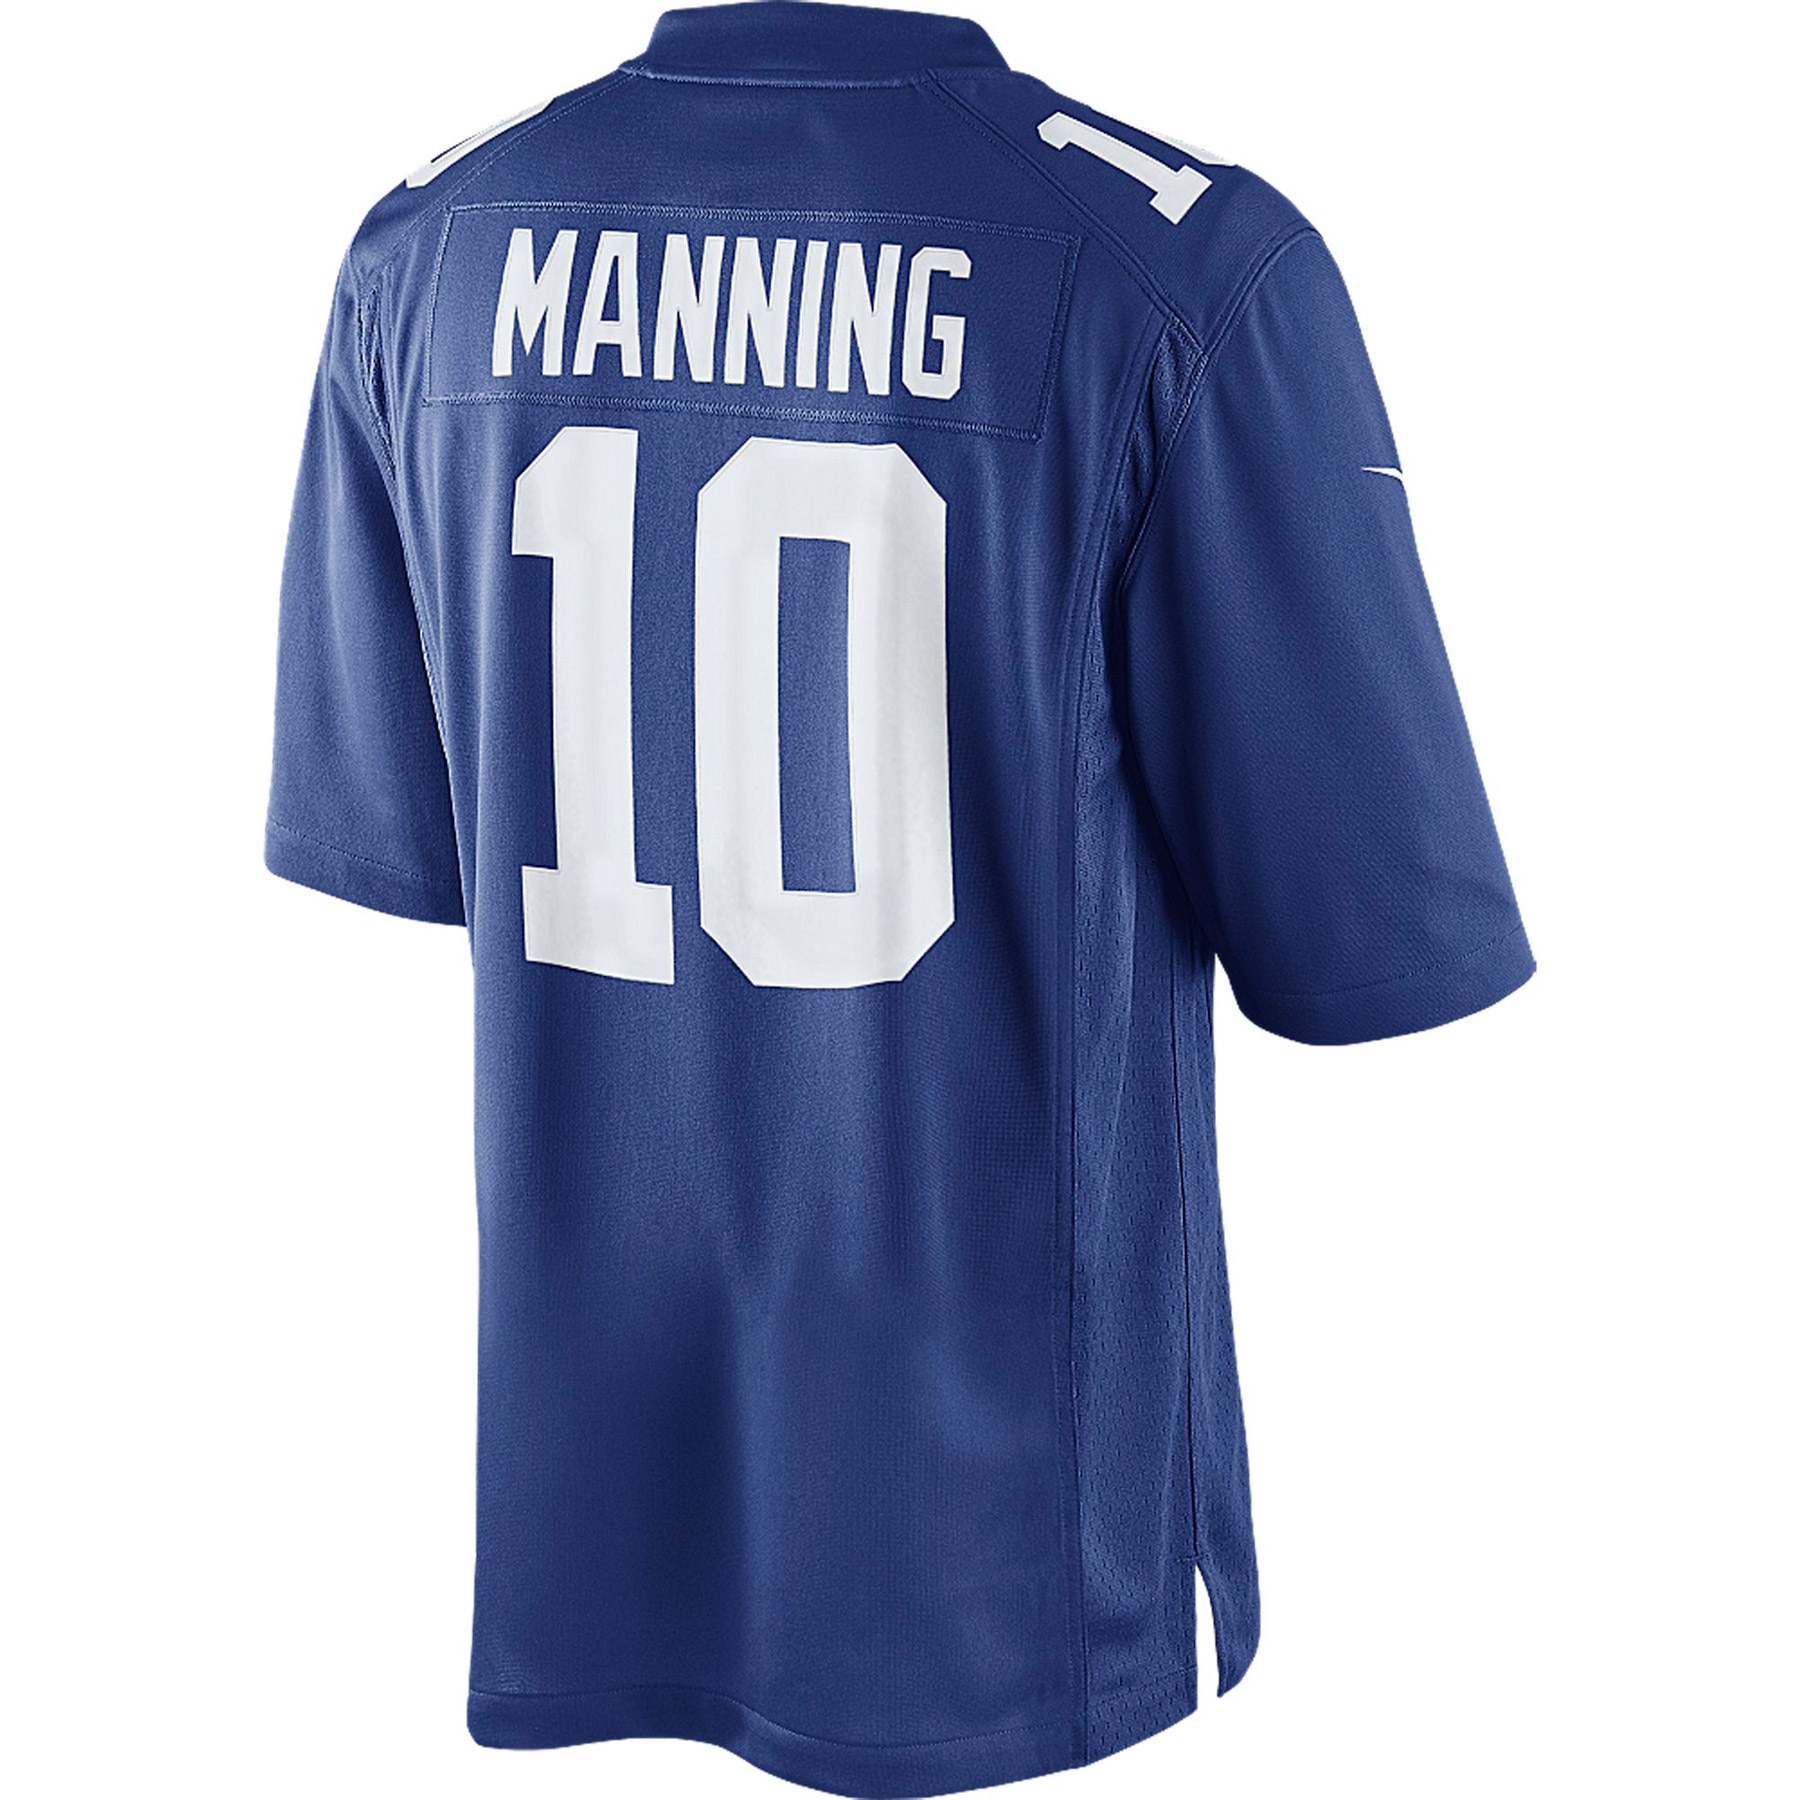 eli manning's jersey